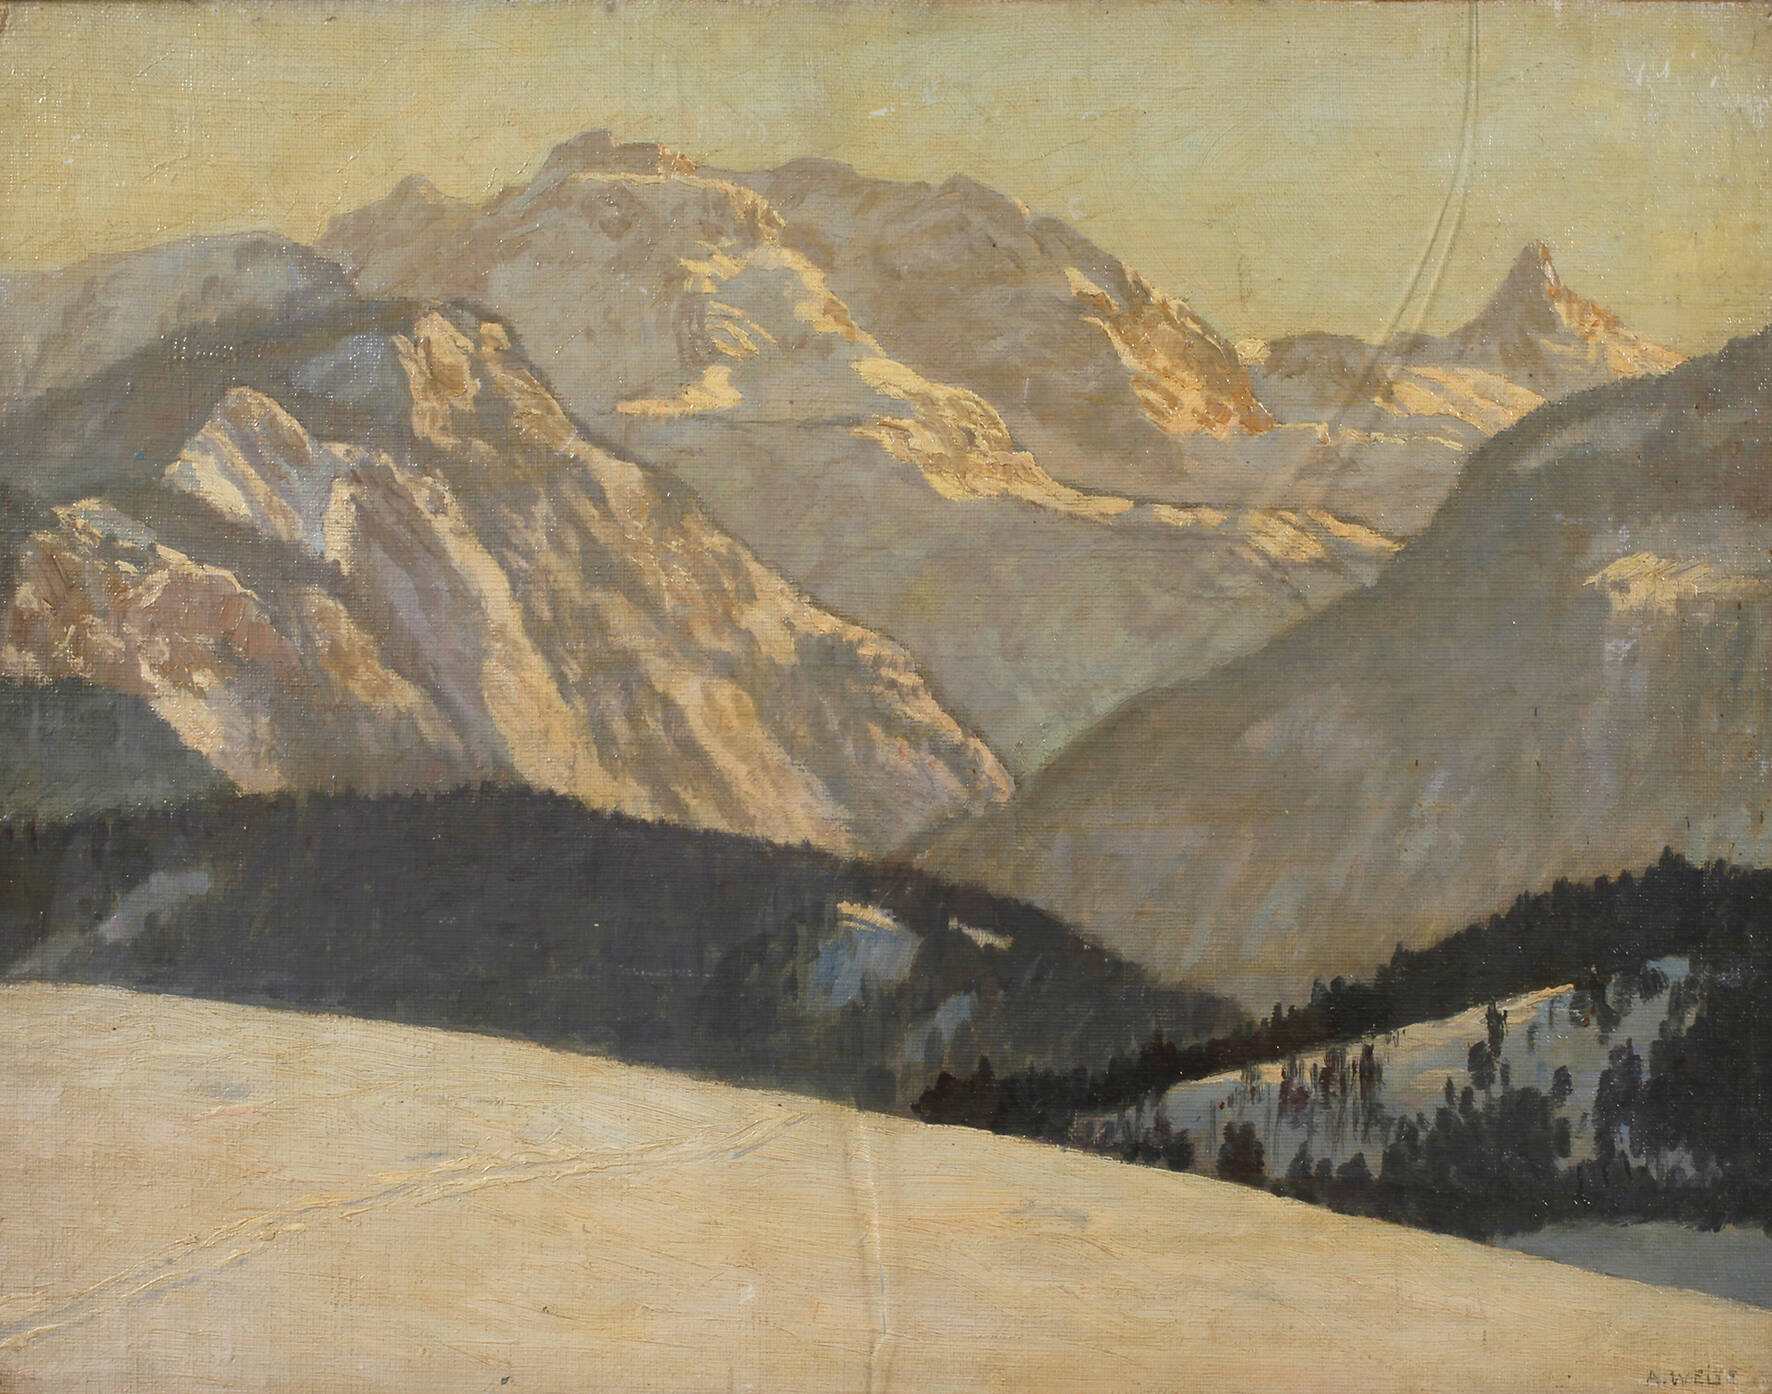 Alexander Weise, "Berchtesgadener Land"